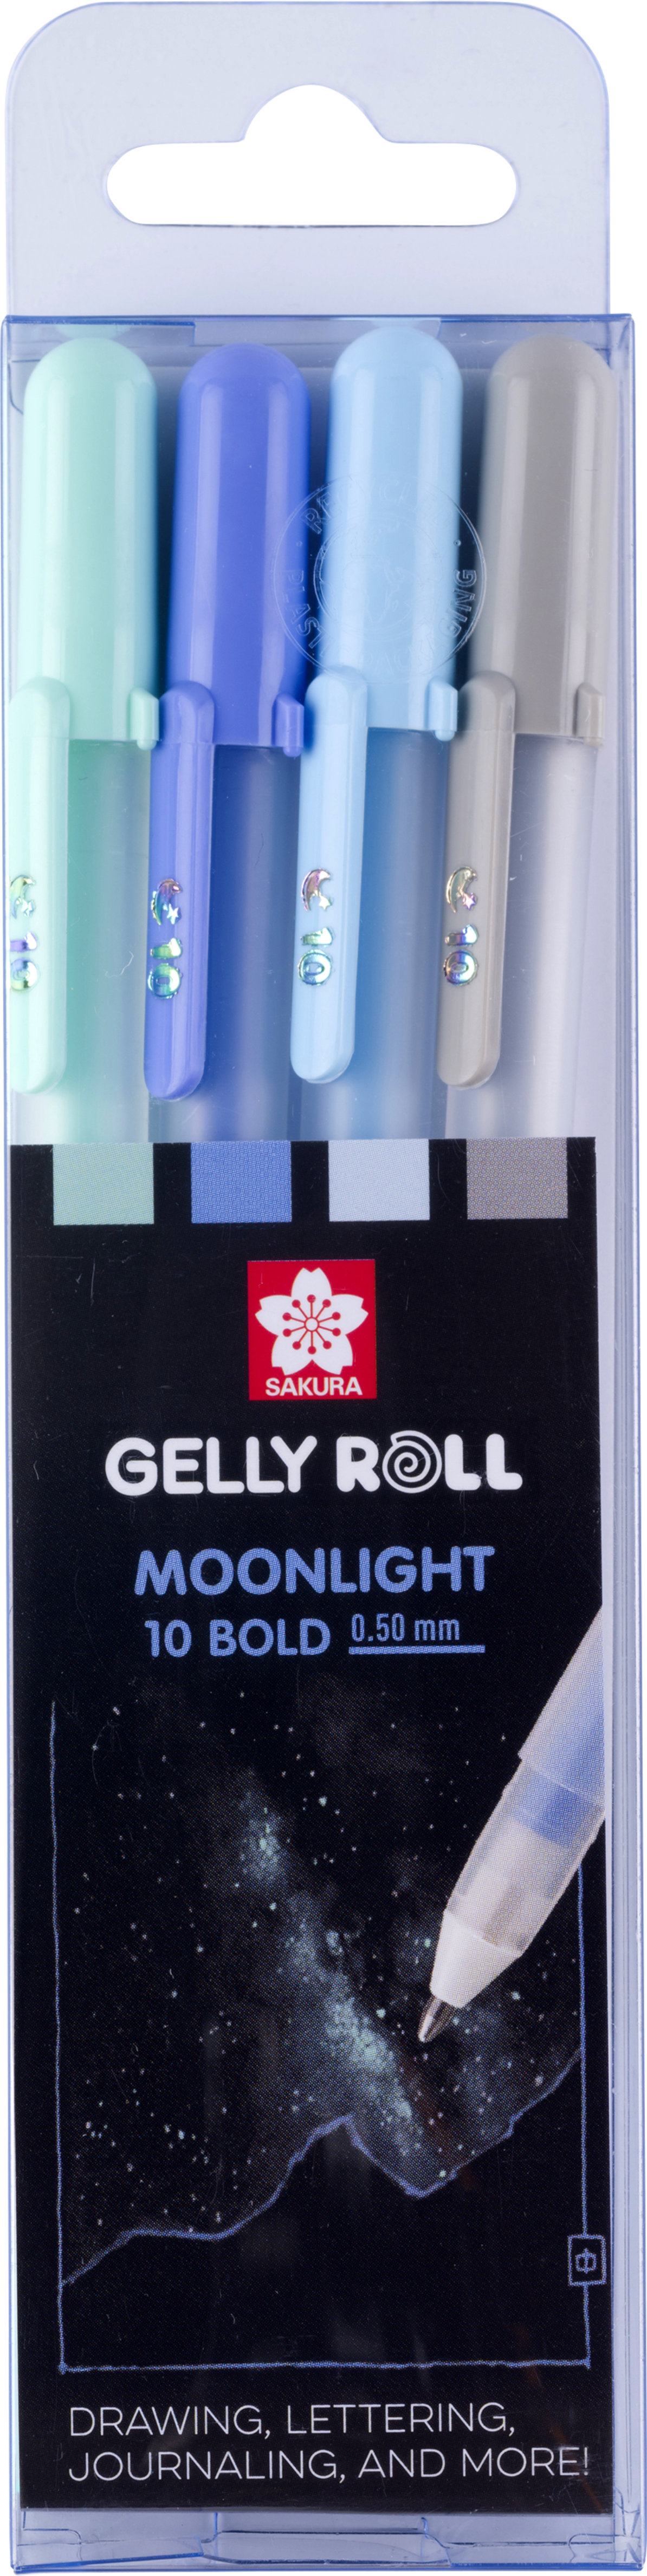 SAKURA Gelly Roll 0.50mm POXPGBMOO4B Moonlight Pastel Aurora 4 pcs.